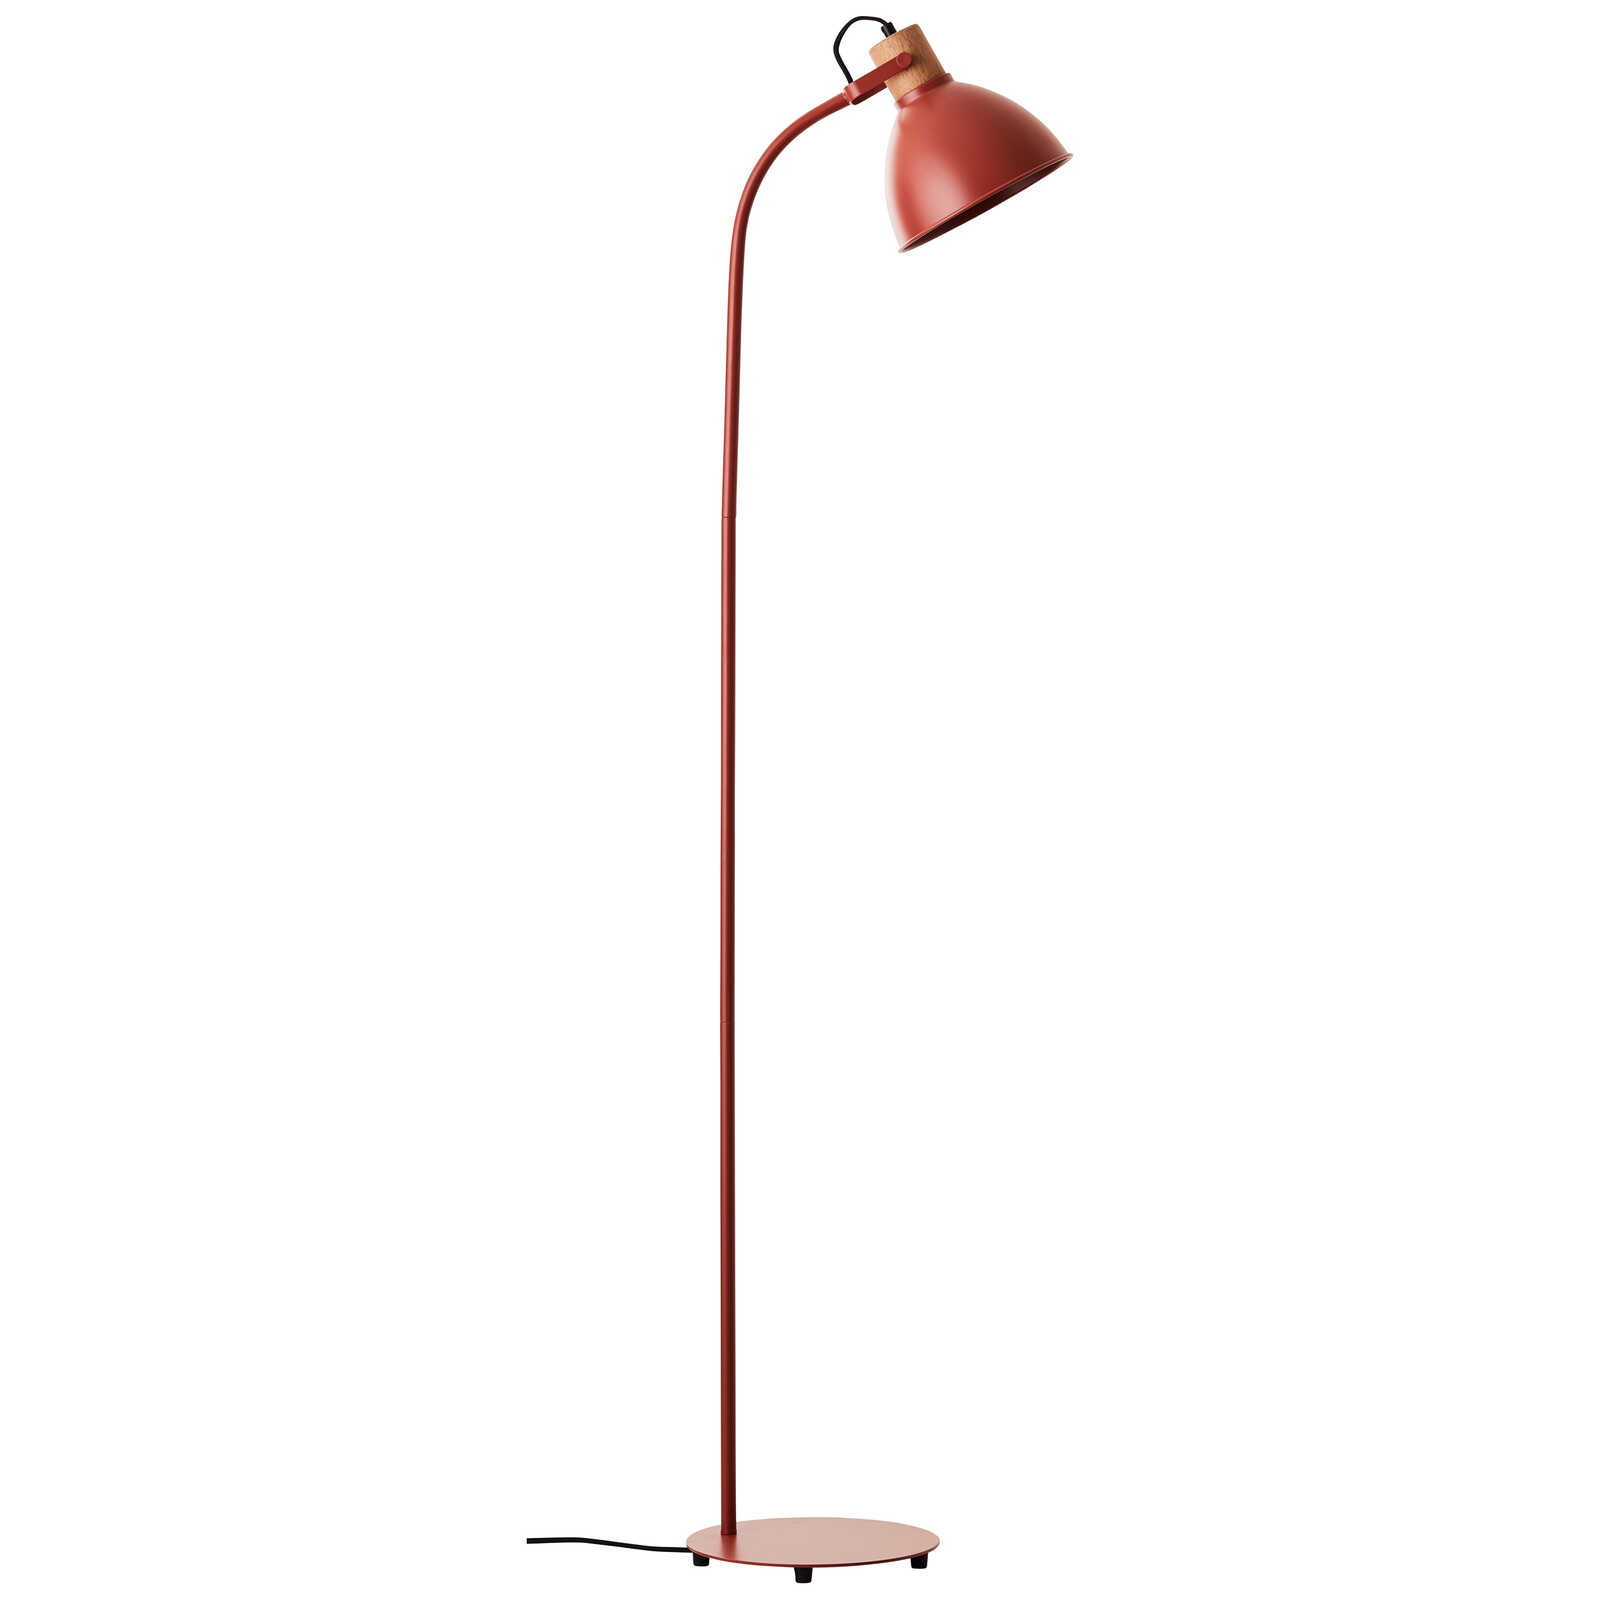             Wooden floor lamp - Franziska 5 - Red
        